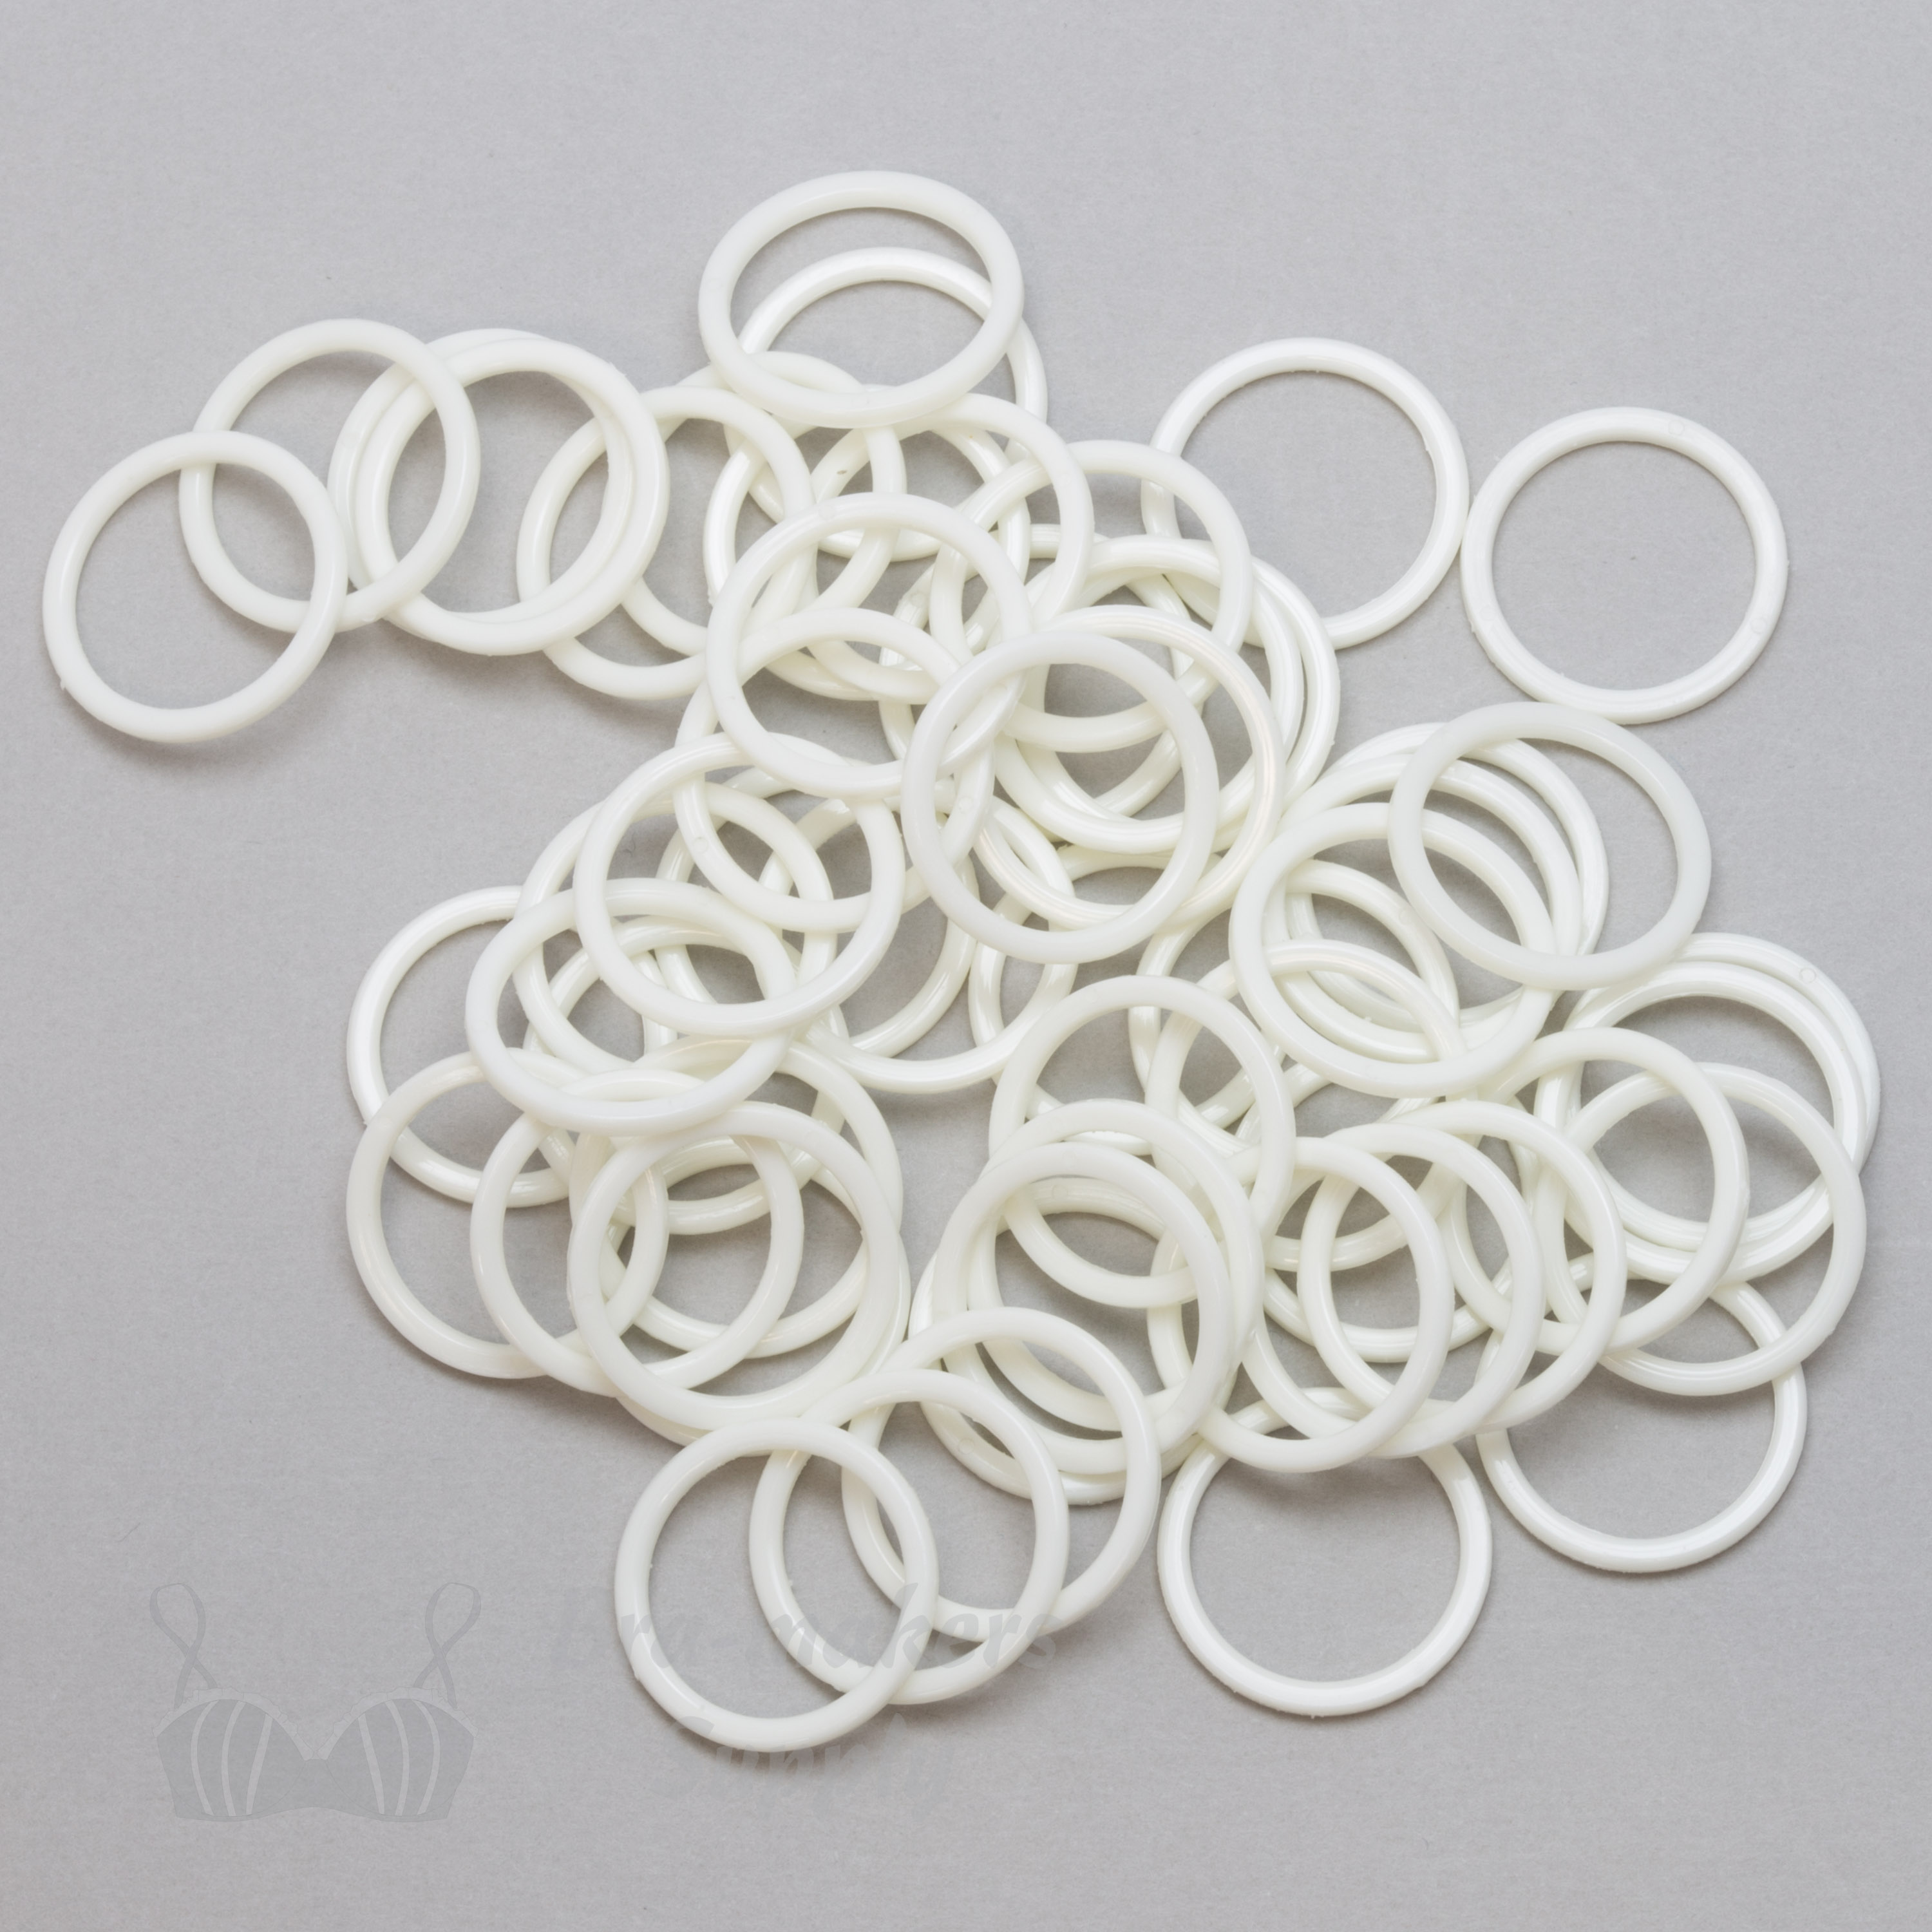 Plastic Sliders Rings - Bra-makers Supply for the best bra-making supplies